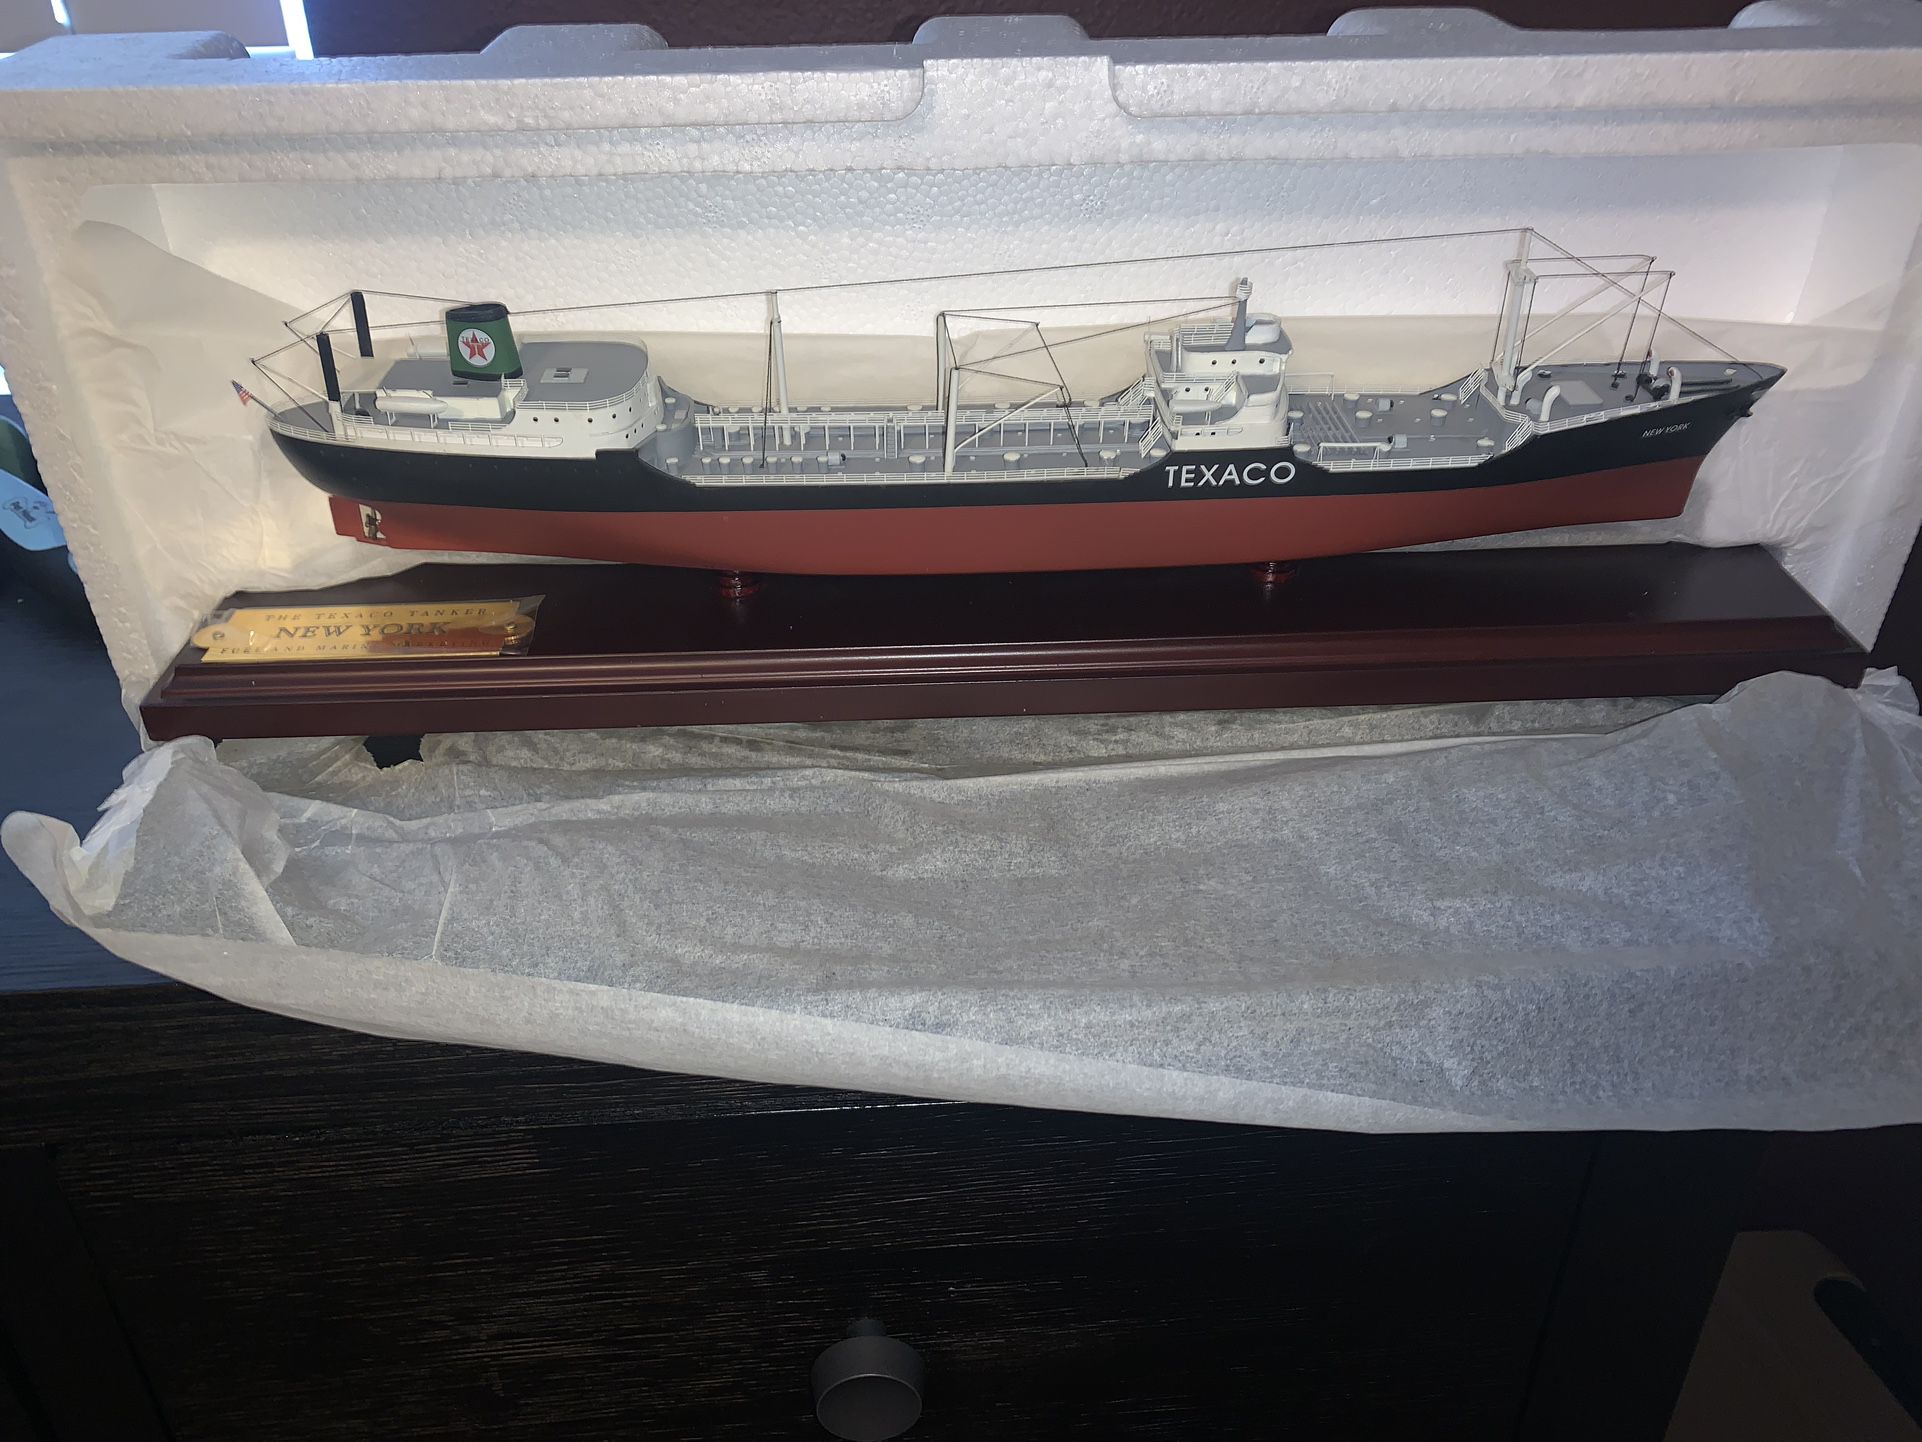 The tanker texaco new york collectible model 